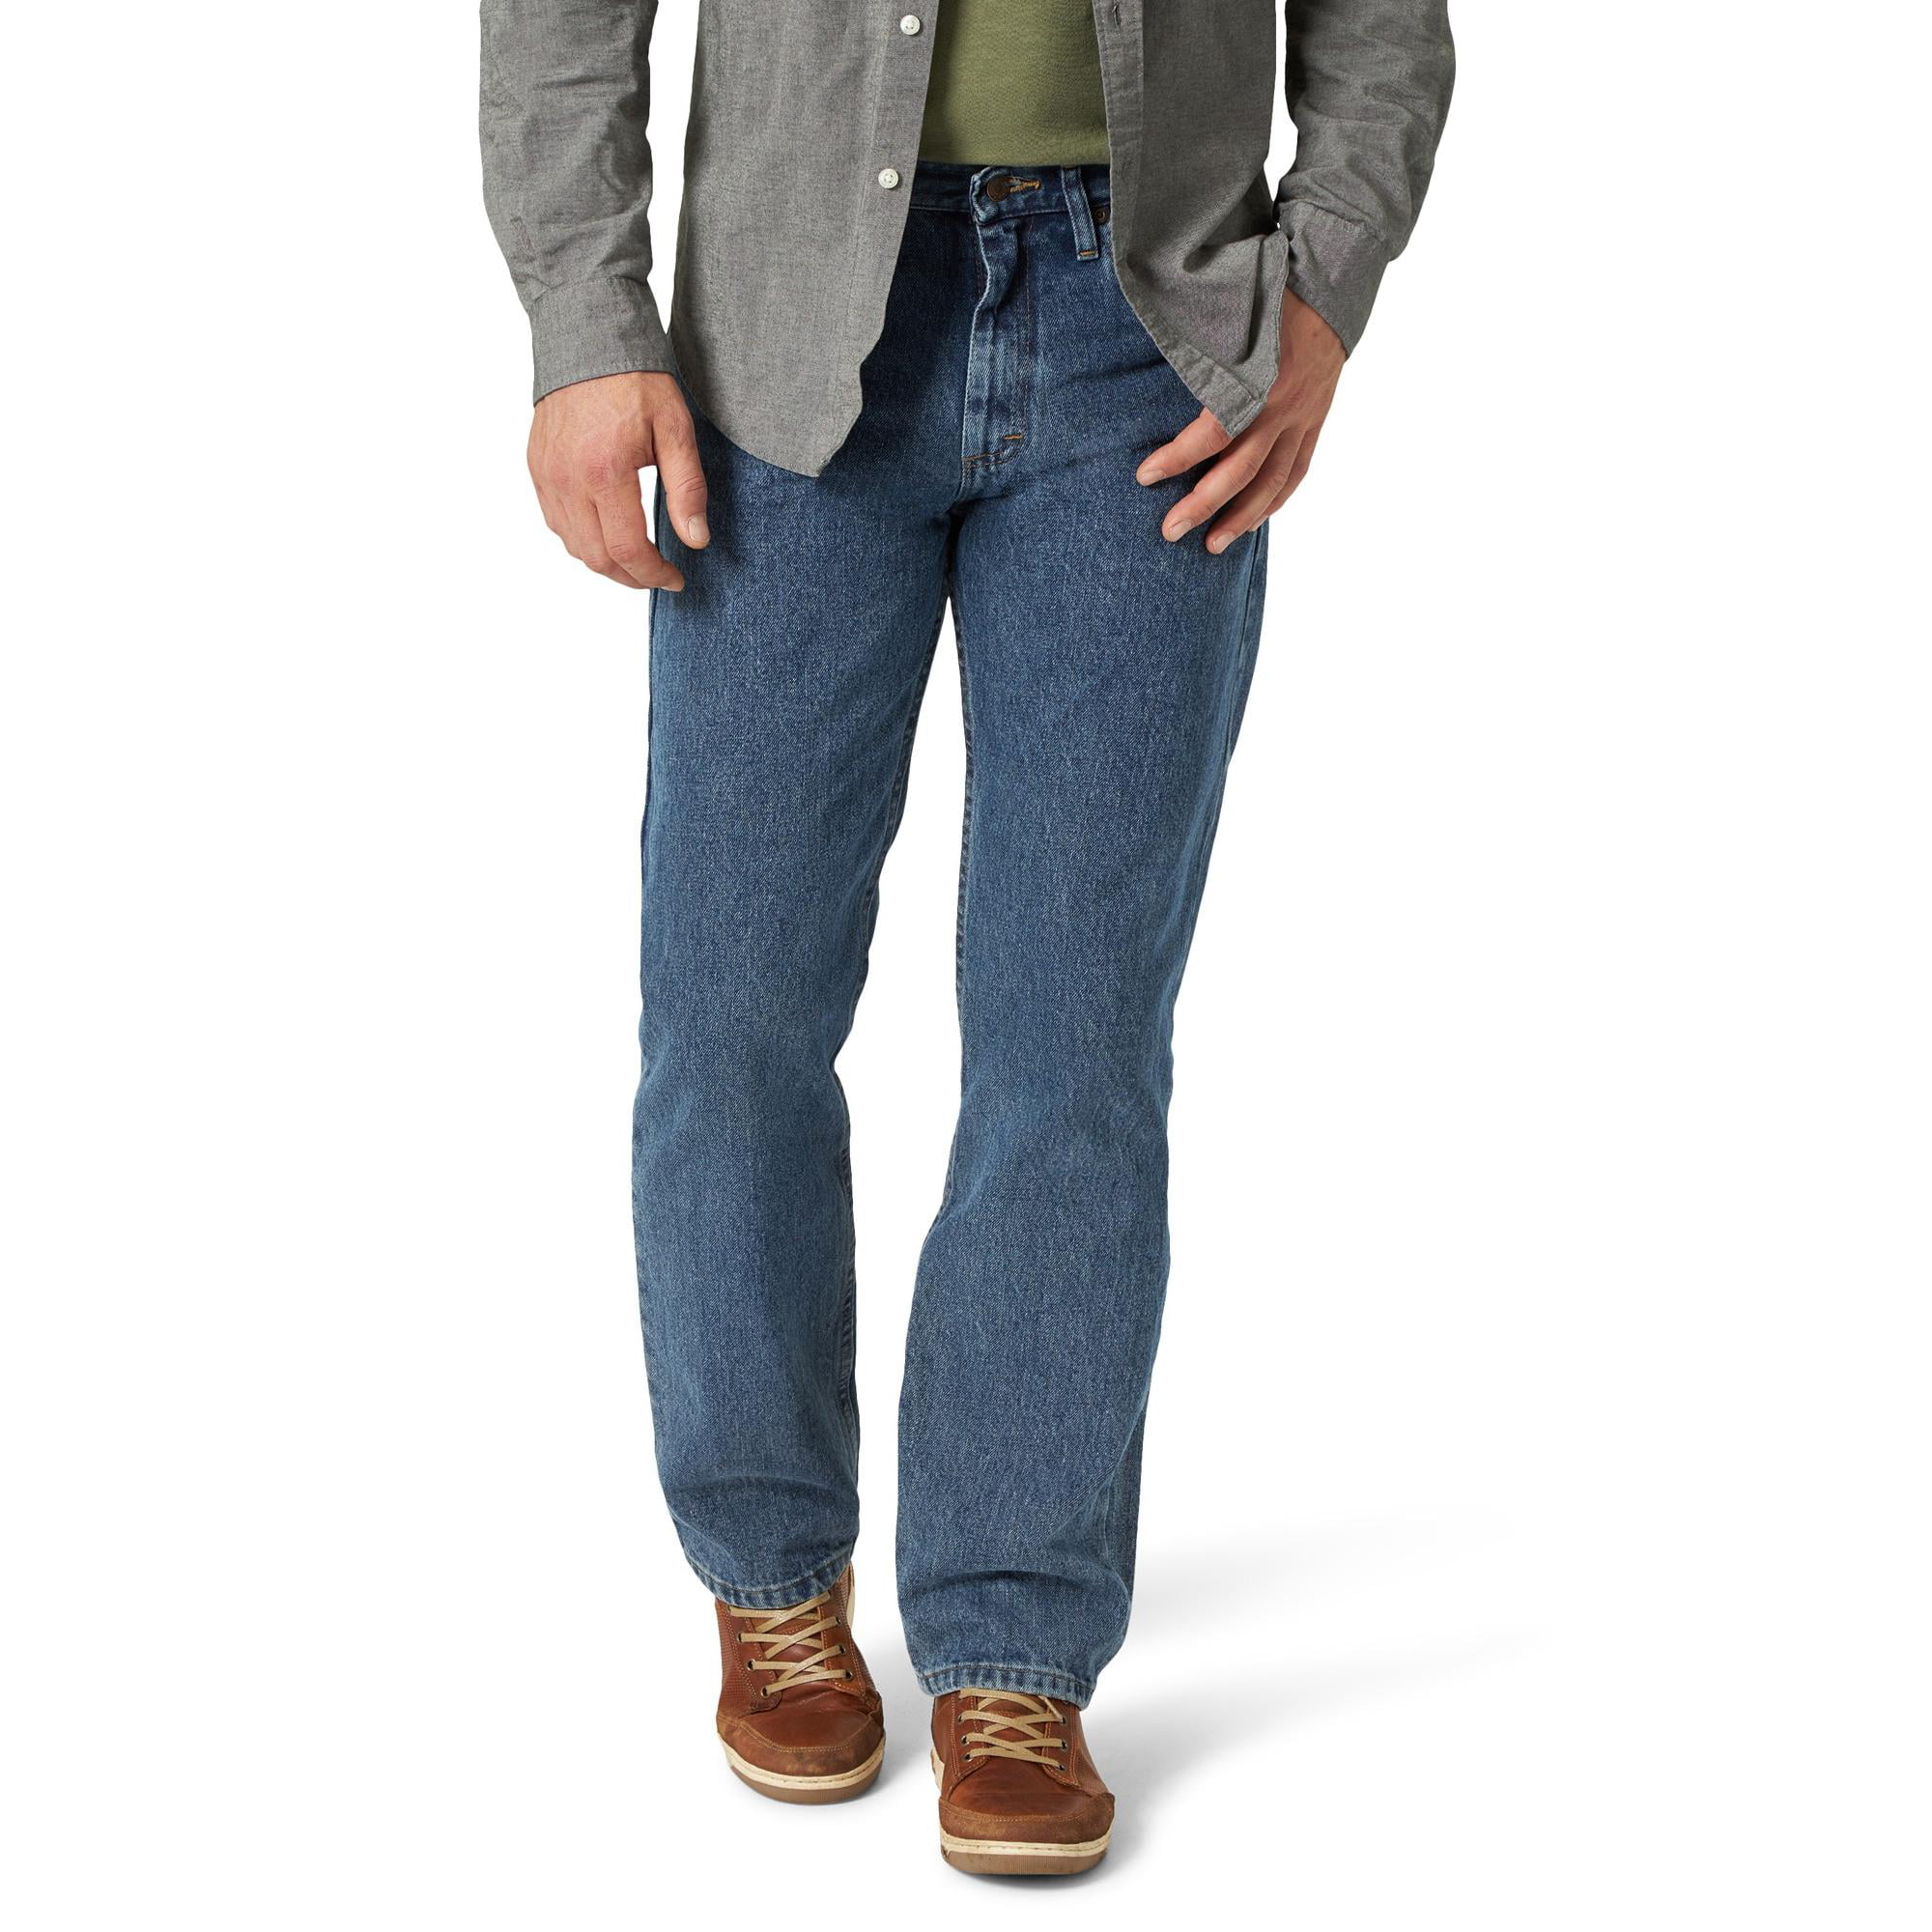 Wrangler - Wrangler Men's Relaxed Fit Jeans - Walmart.com - Walmart.com